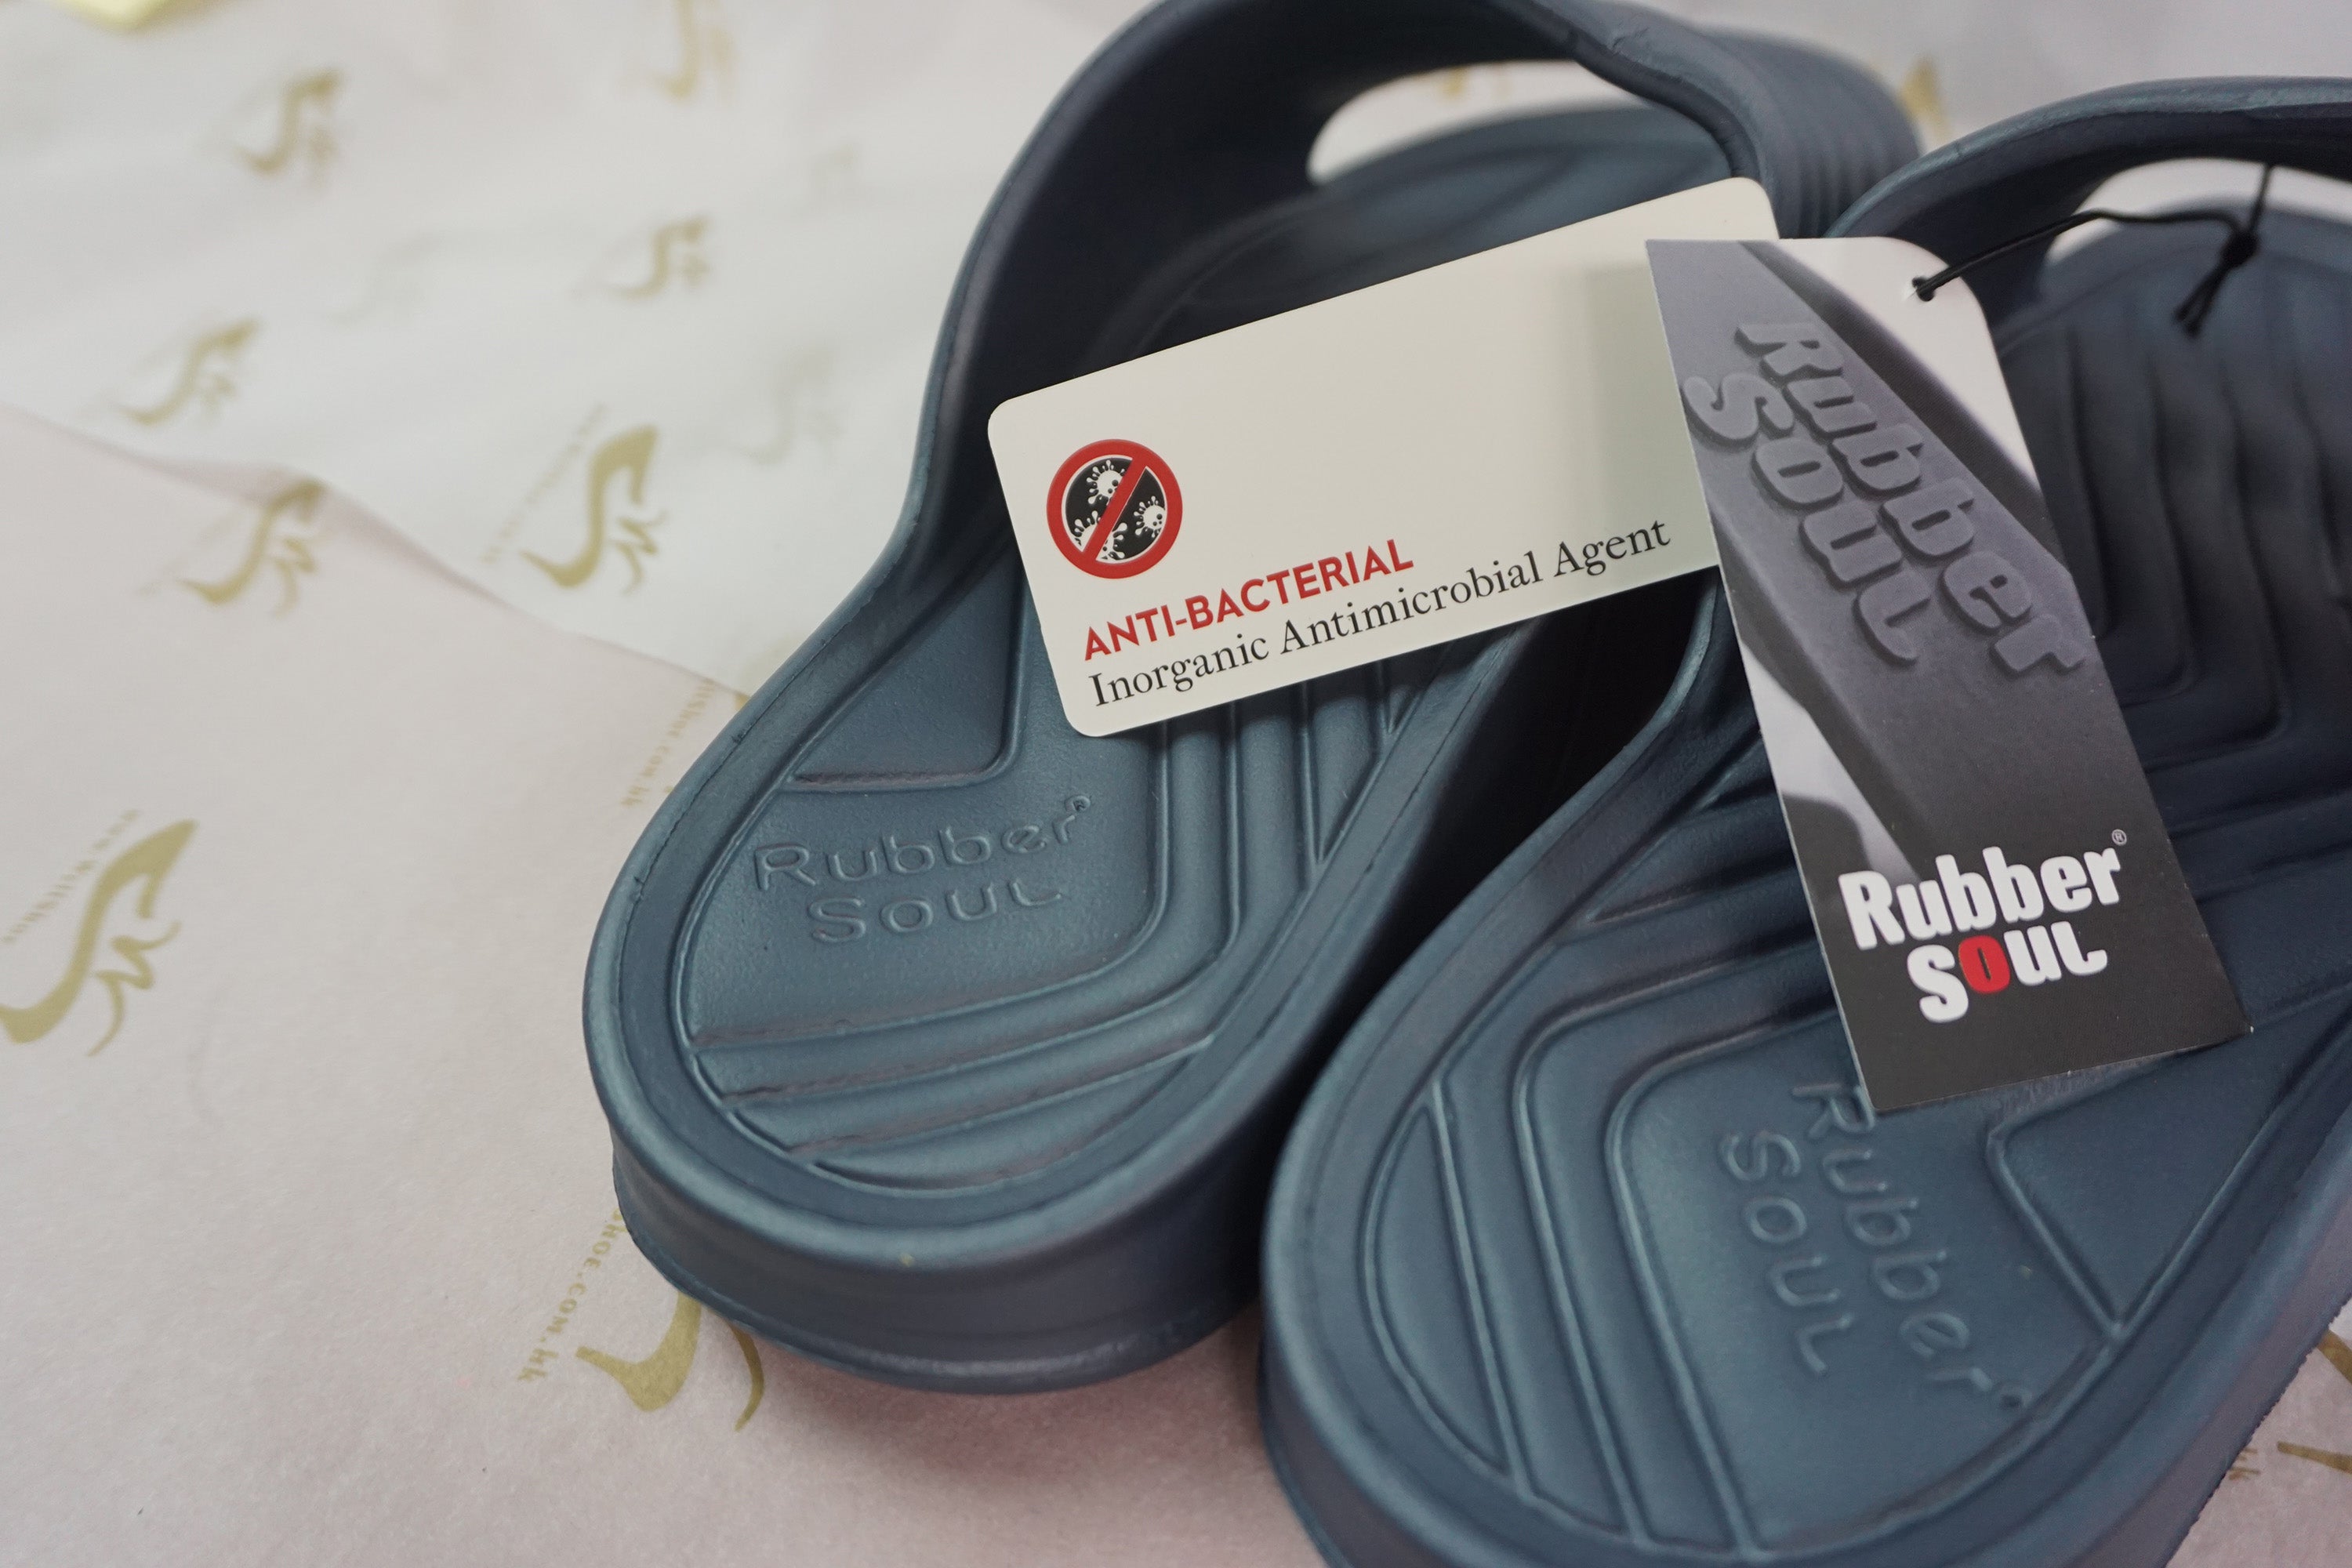 T3328 Casual Sandals (Thailand Made)-FLEX-GY-US Size: 10-偉豐鞋 WELL SHOE HK-Well Shoe-偉豐鞋-偉豐網-荃灣鞋店-Functional shoes-Hong Kong Tsuen Wan Shoe Store-Tai Wan Shoe-Japan Shoe-高品質功能鞋-台灣進口鞋-日本進口鞋-High-quality shoes-鞋類配件-荃灣進口鞋-香港鞋店-優質鞋類產品-水靴-帆布鞋-廚師鞋-香港鞋品牌-Hong Kong Shoes brand-長者鞋-Hong Kong Rain Boots-Kitchen shoes-Cruthes-Slipper-Well Shoe Hong Kong-Anello-Arriba-休閒鞋-舒適鞋-健康鞋-皮鞋-Healthy shoes-Leather shoes-Hiking shoes